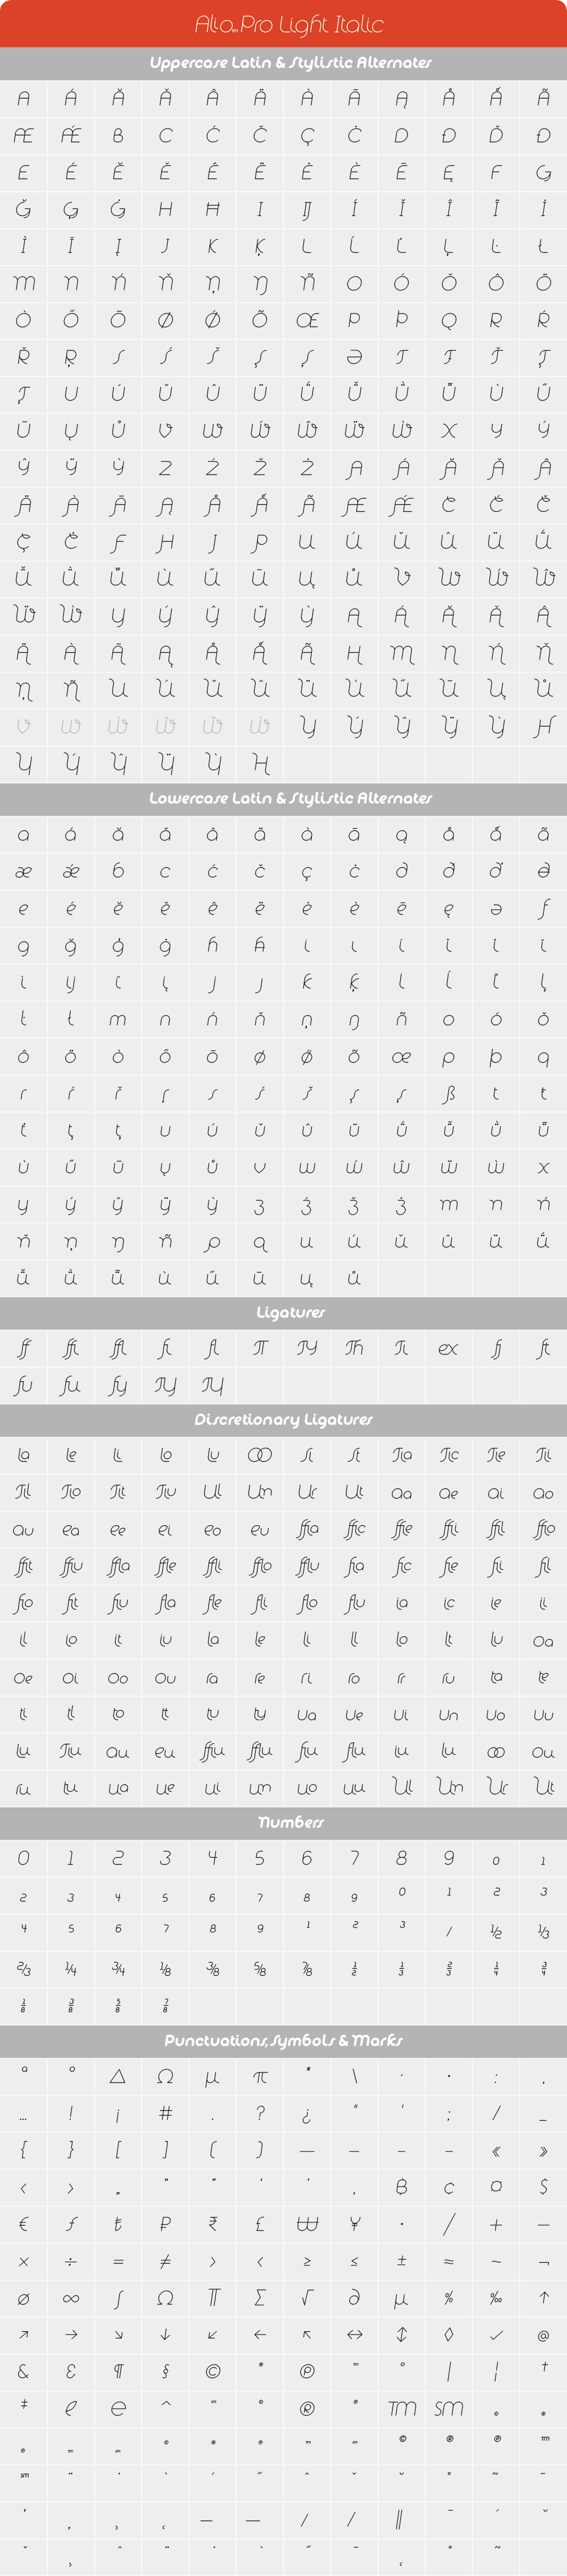 Alio Pro Light Italic Glyph Set